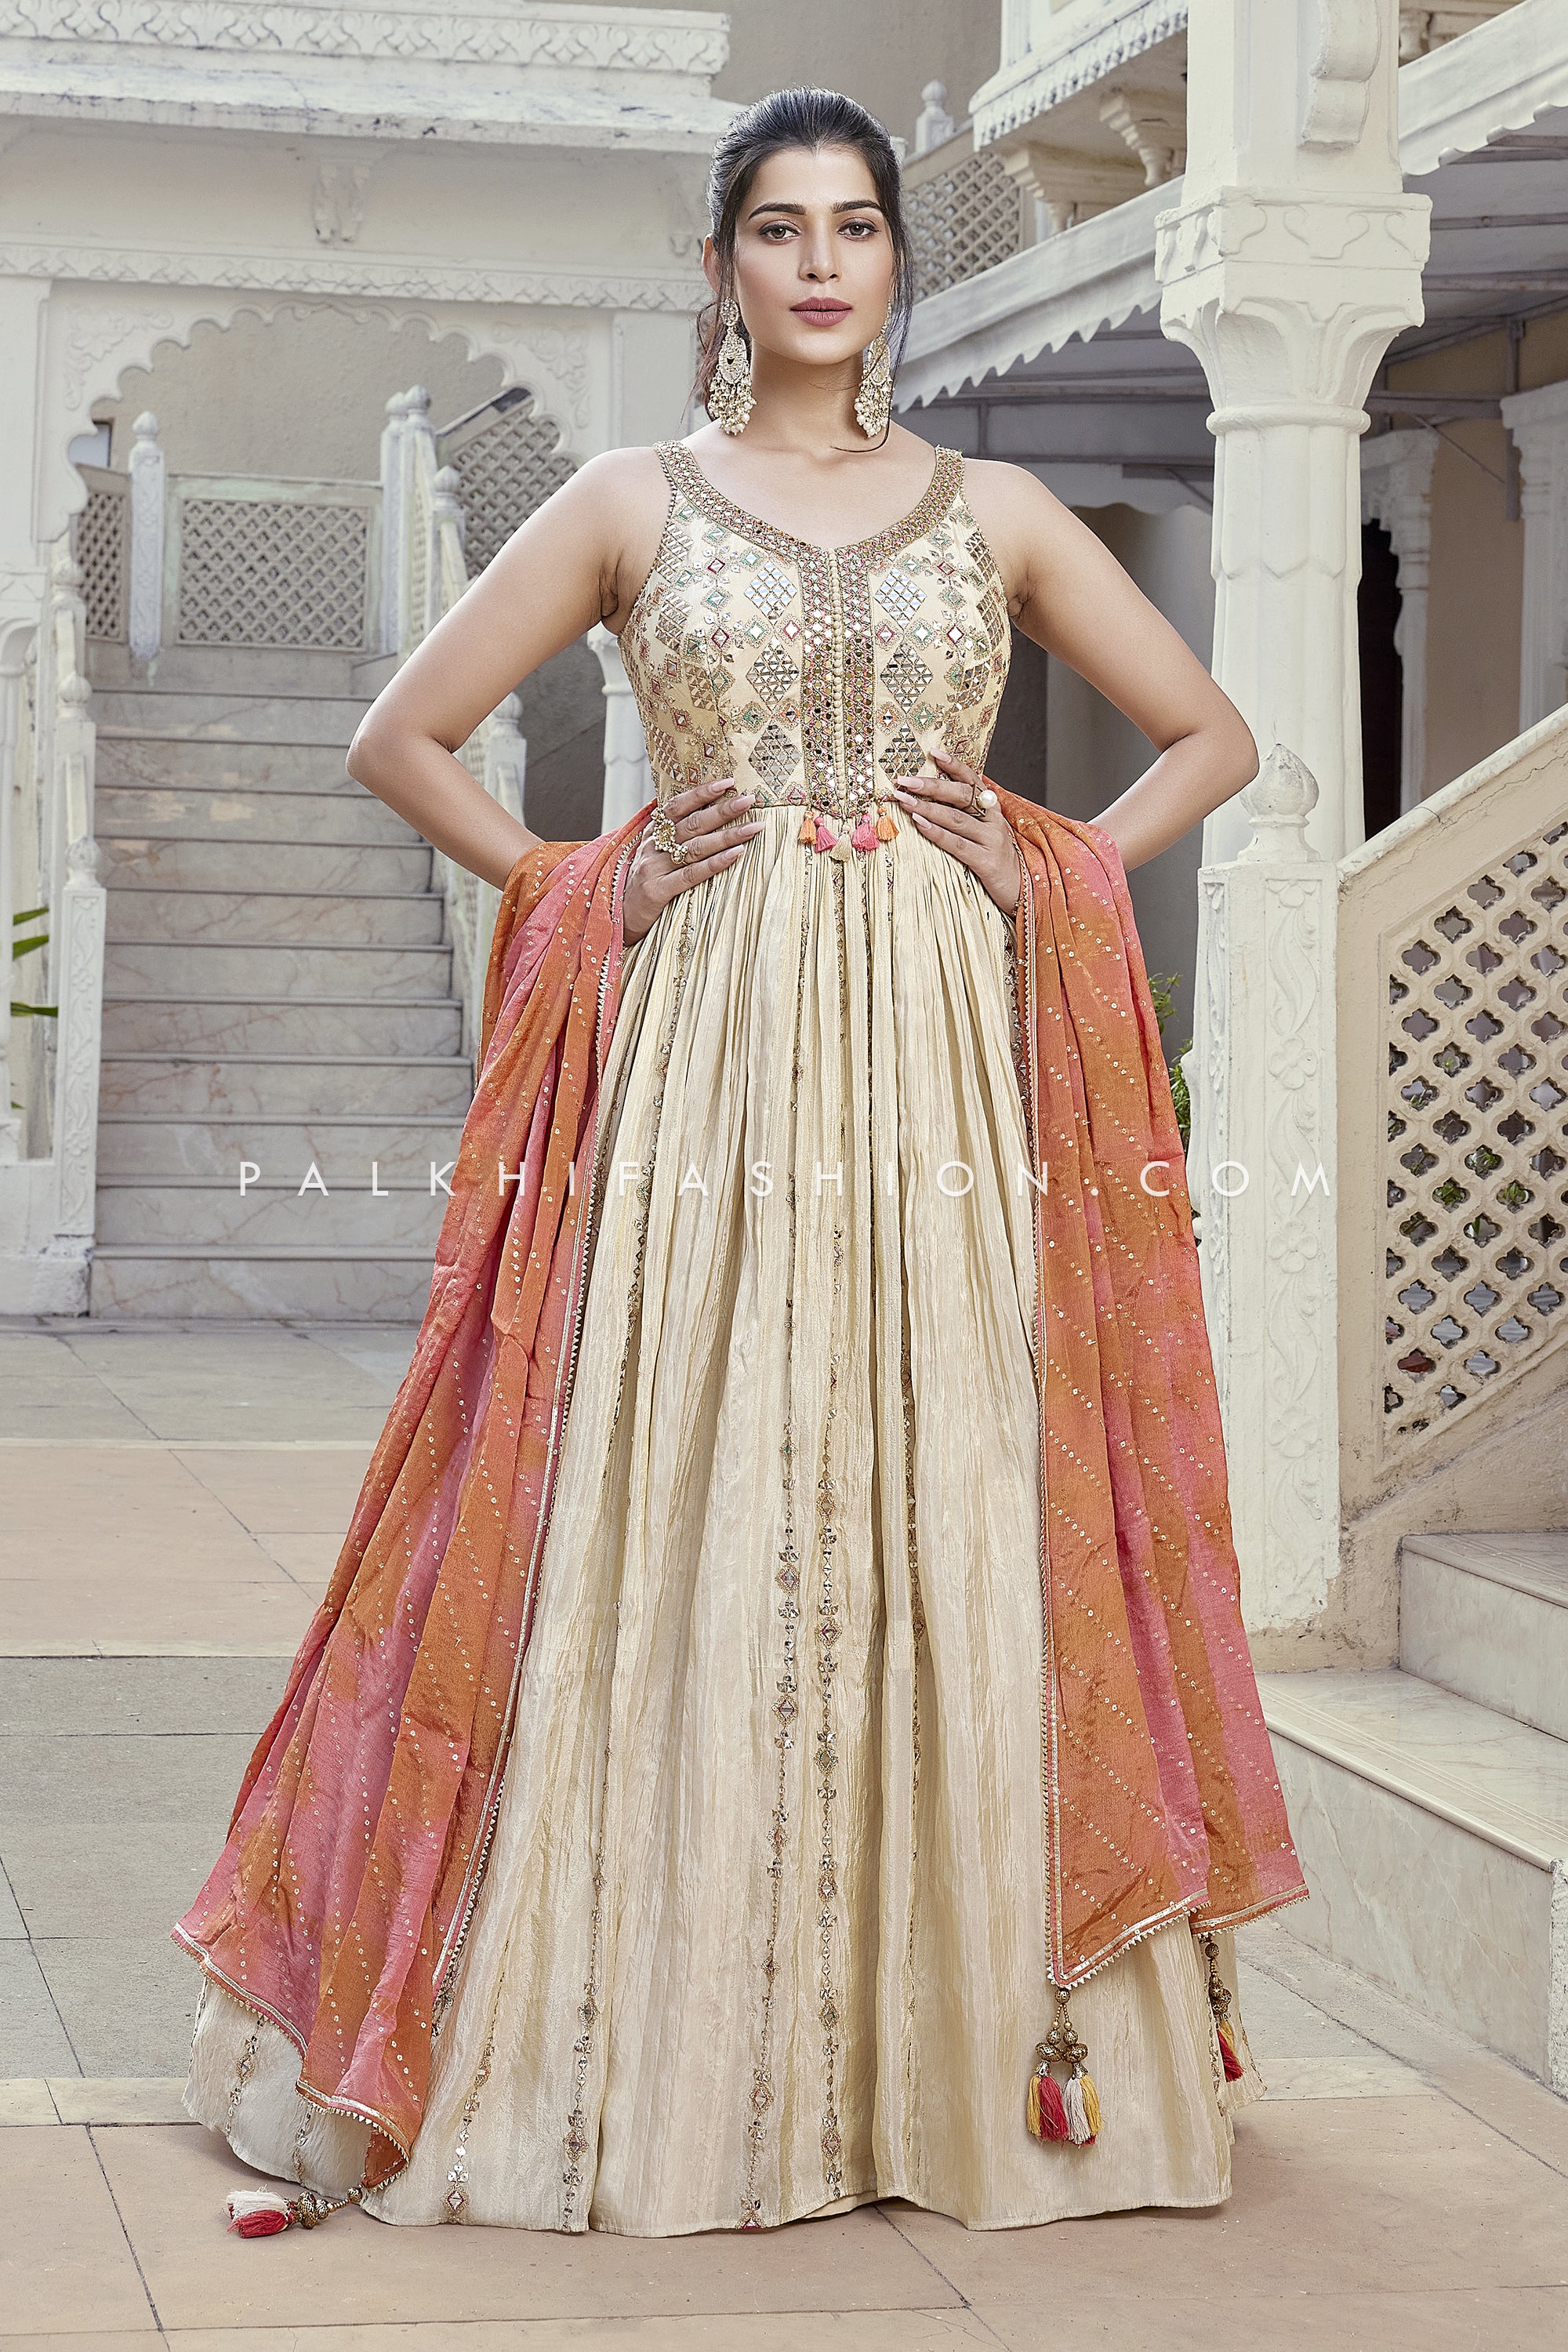 Traditional Dressing in Modern India | by Pri Mal | Medium